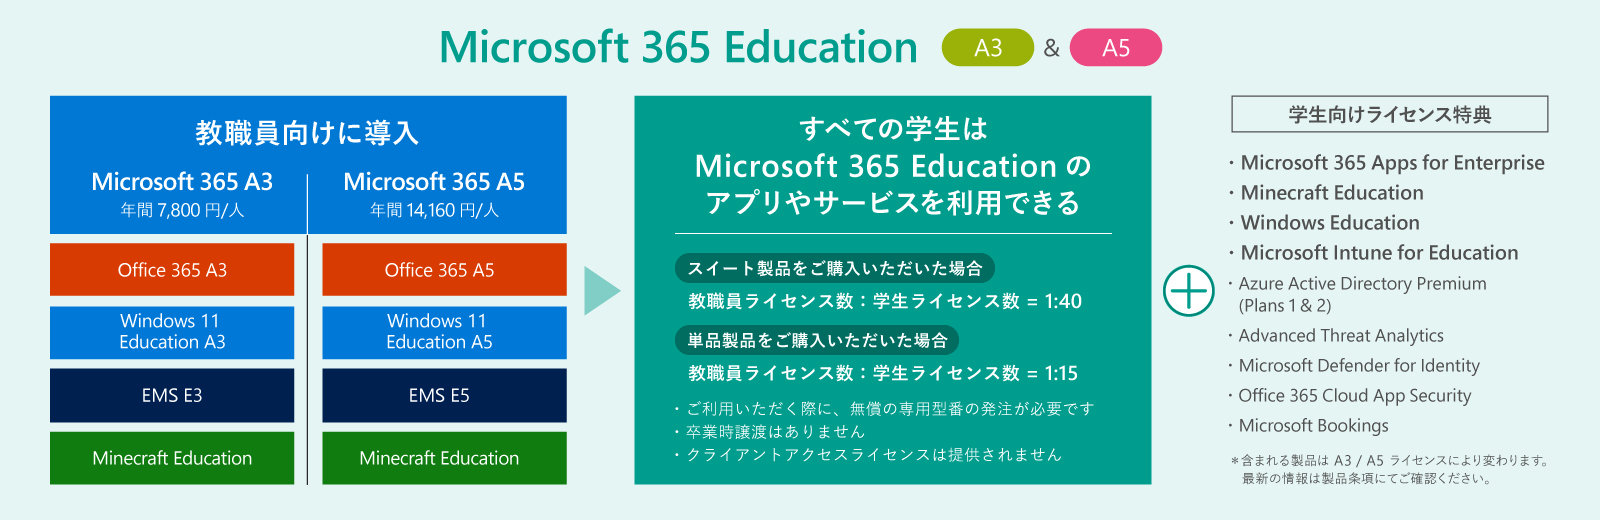 Microsoft 365 Education A3 & A5